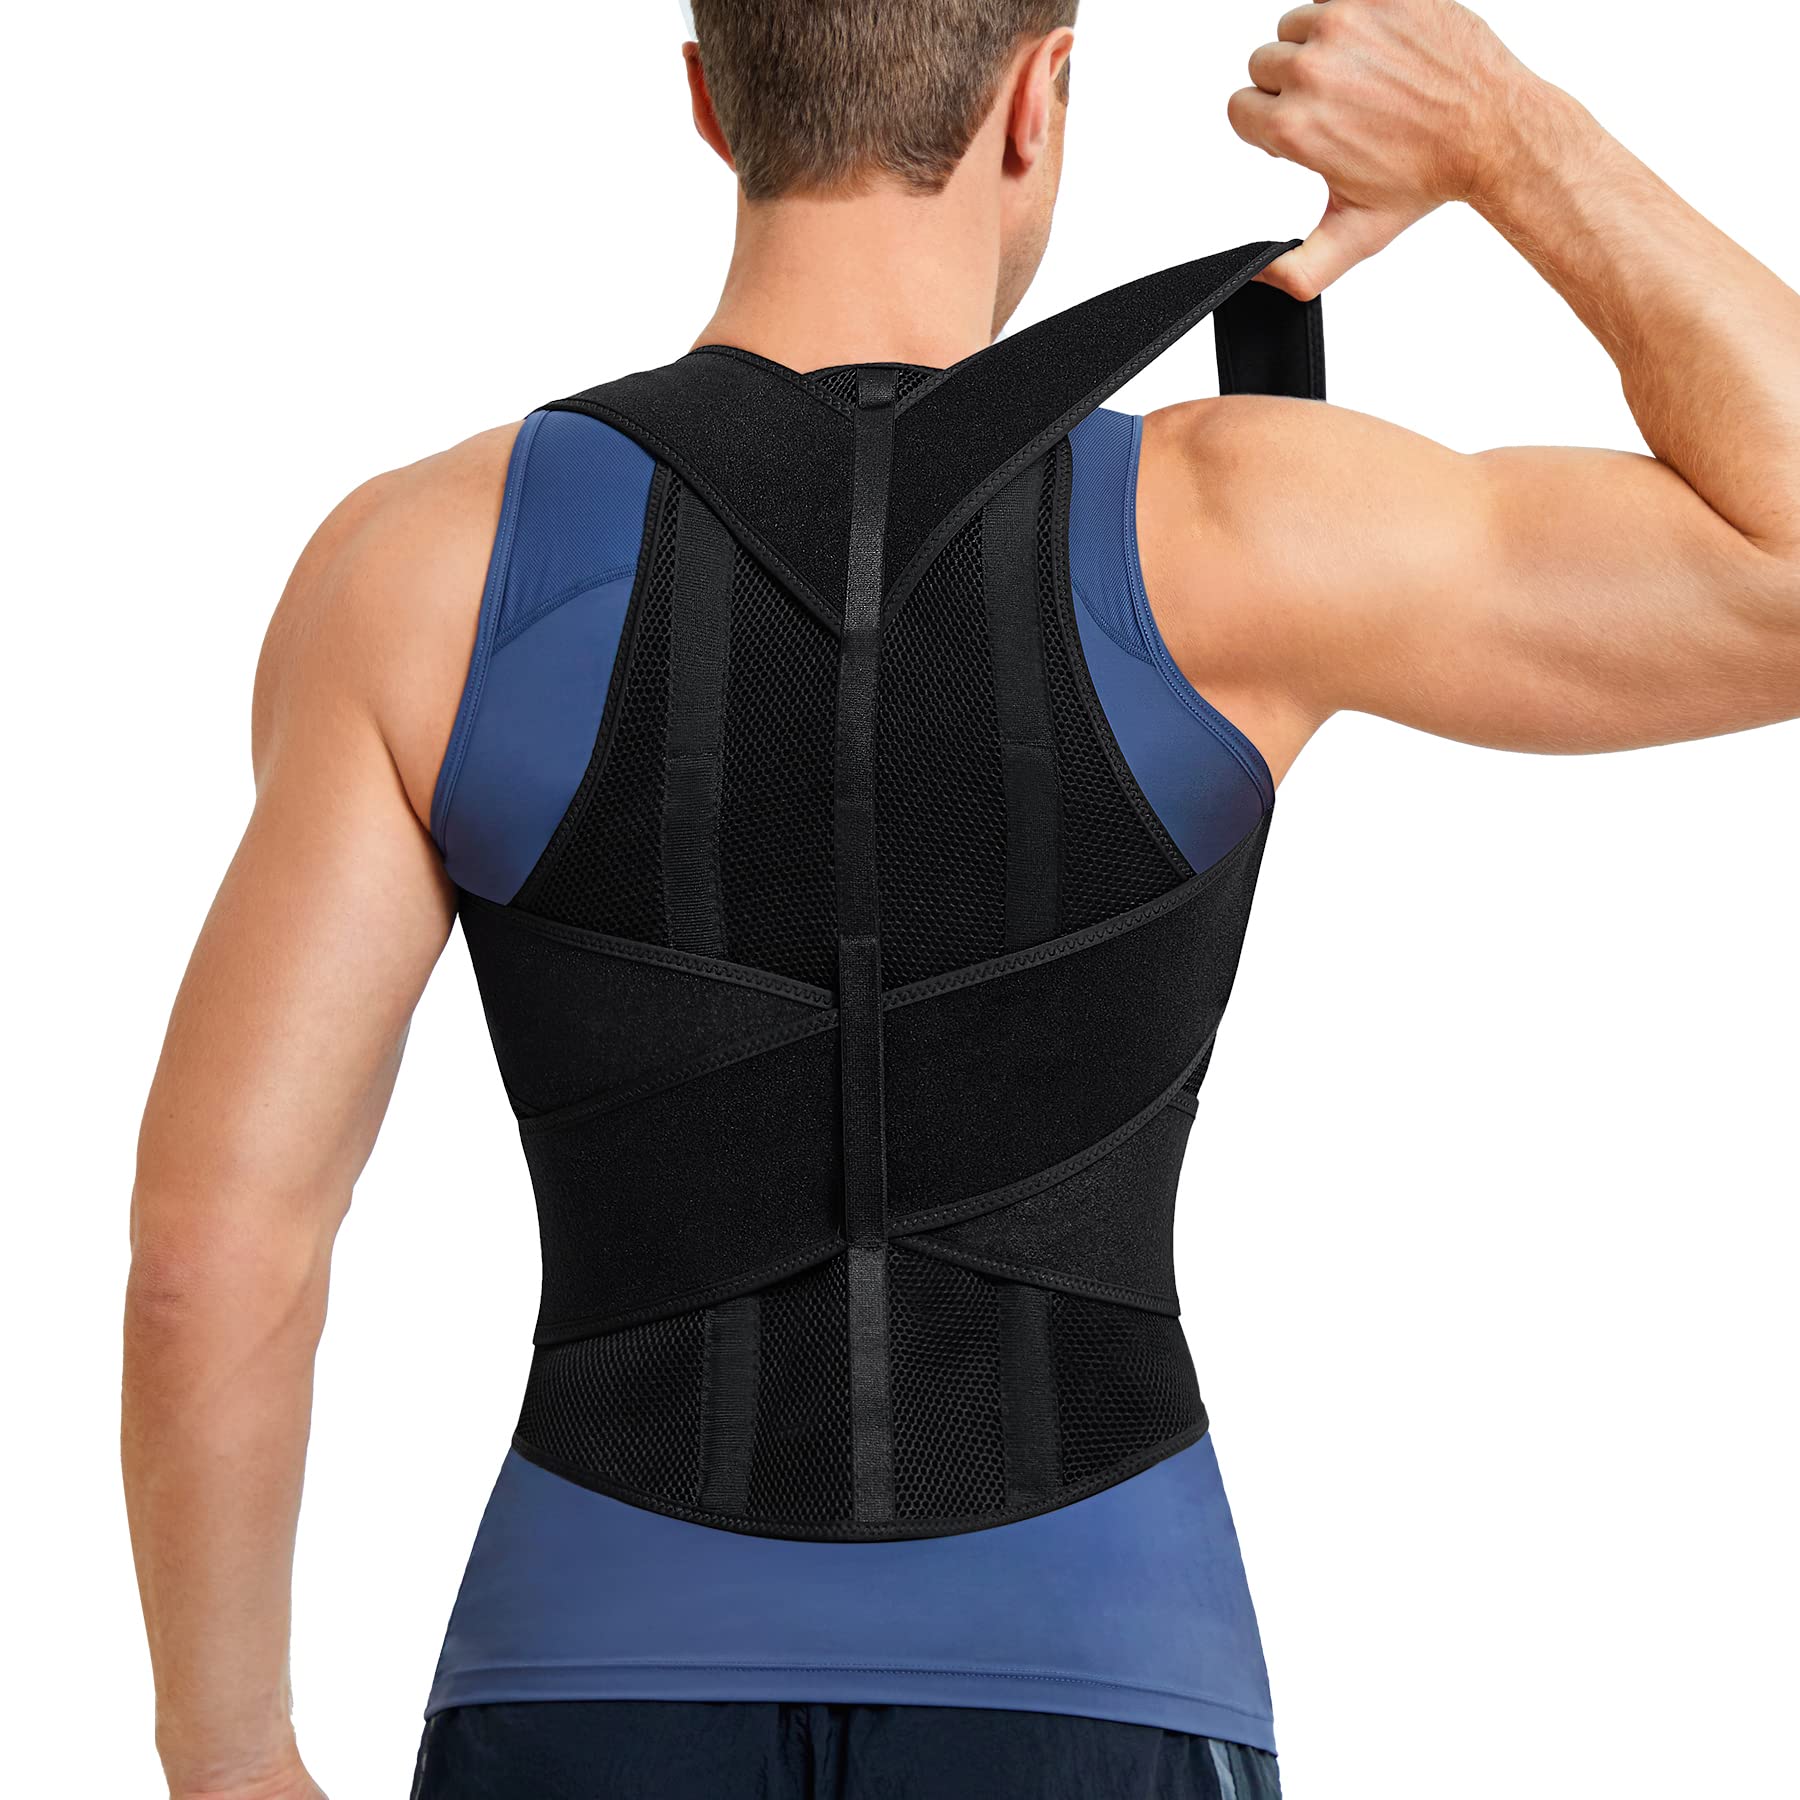 Postural Extension Back Straightener Brace - Rigid Posture Corrector Vest for Kyphosis Hunch Relief Mild Scoliosis Support and